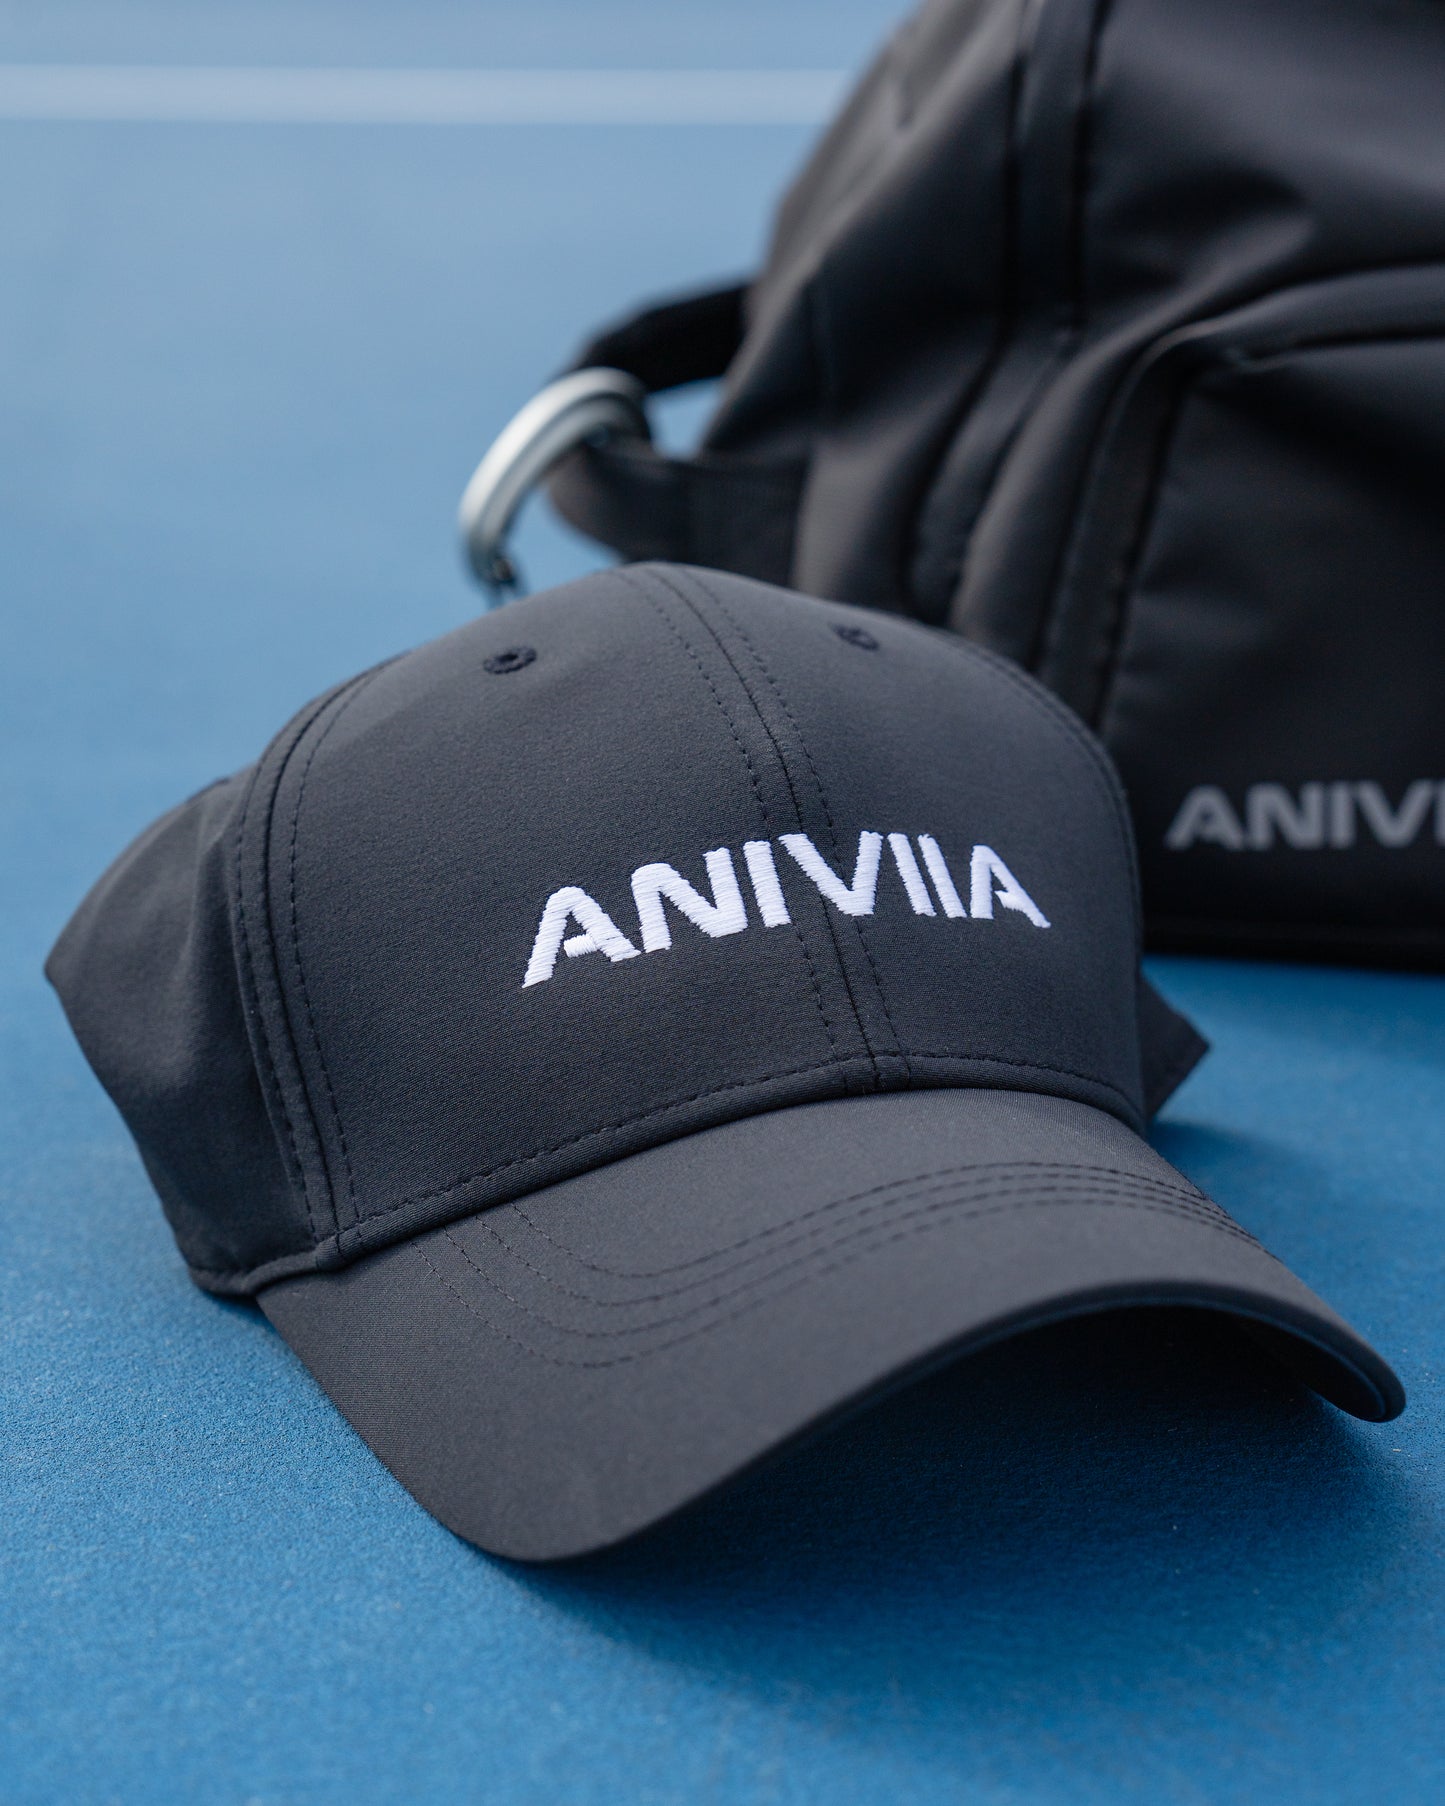 Aniviia x Nike Dry-Fit 帽子